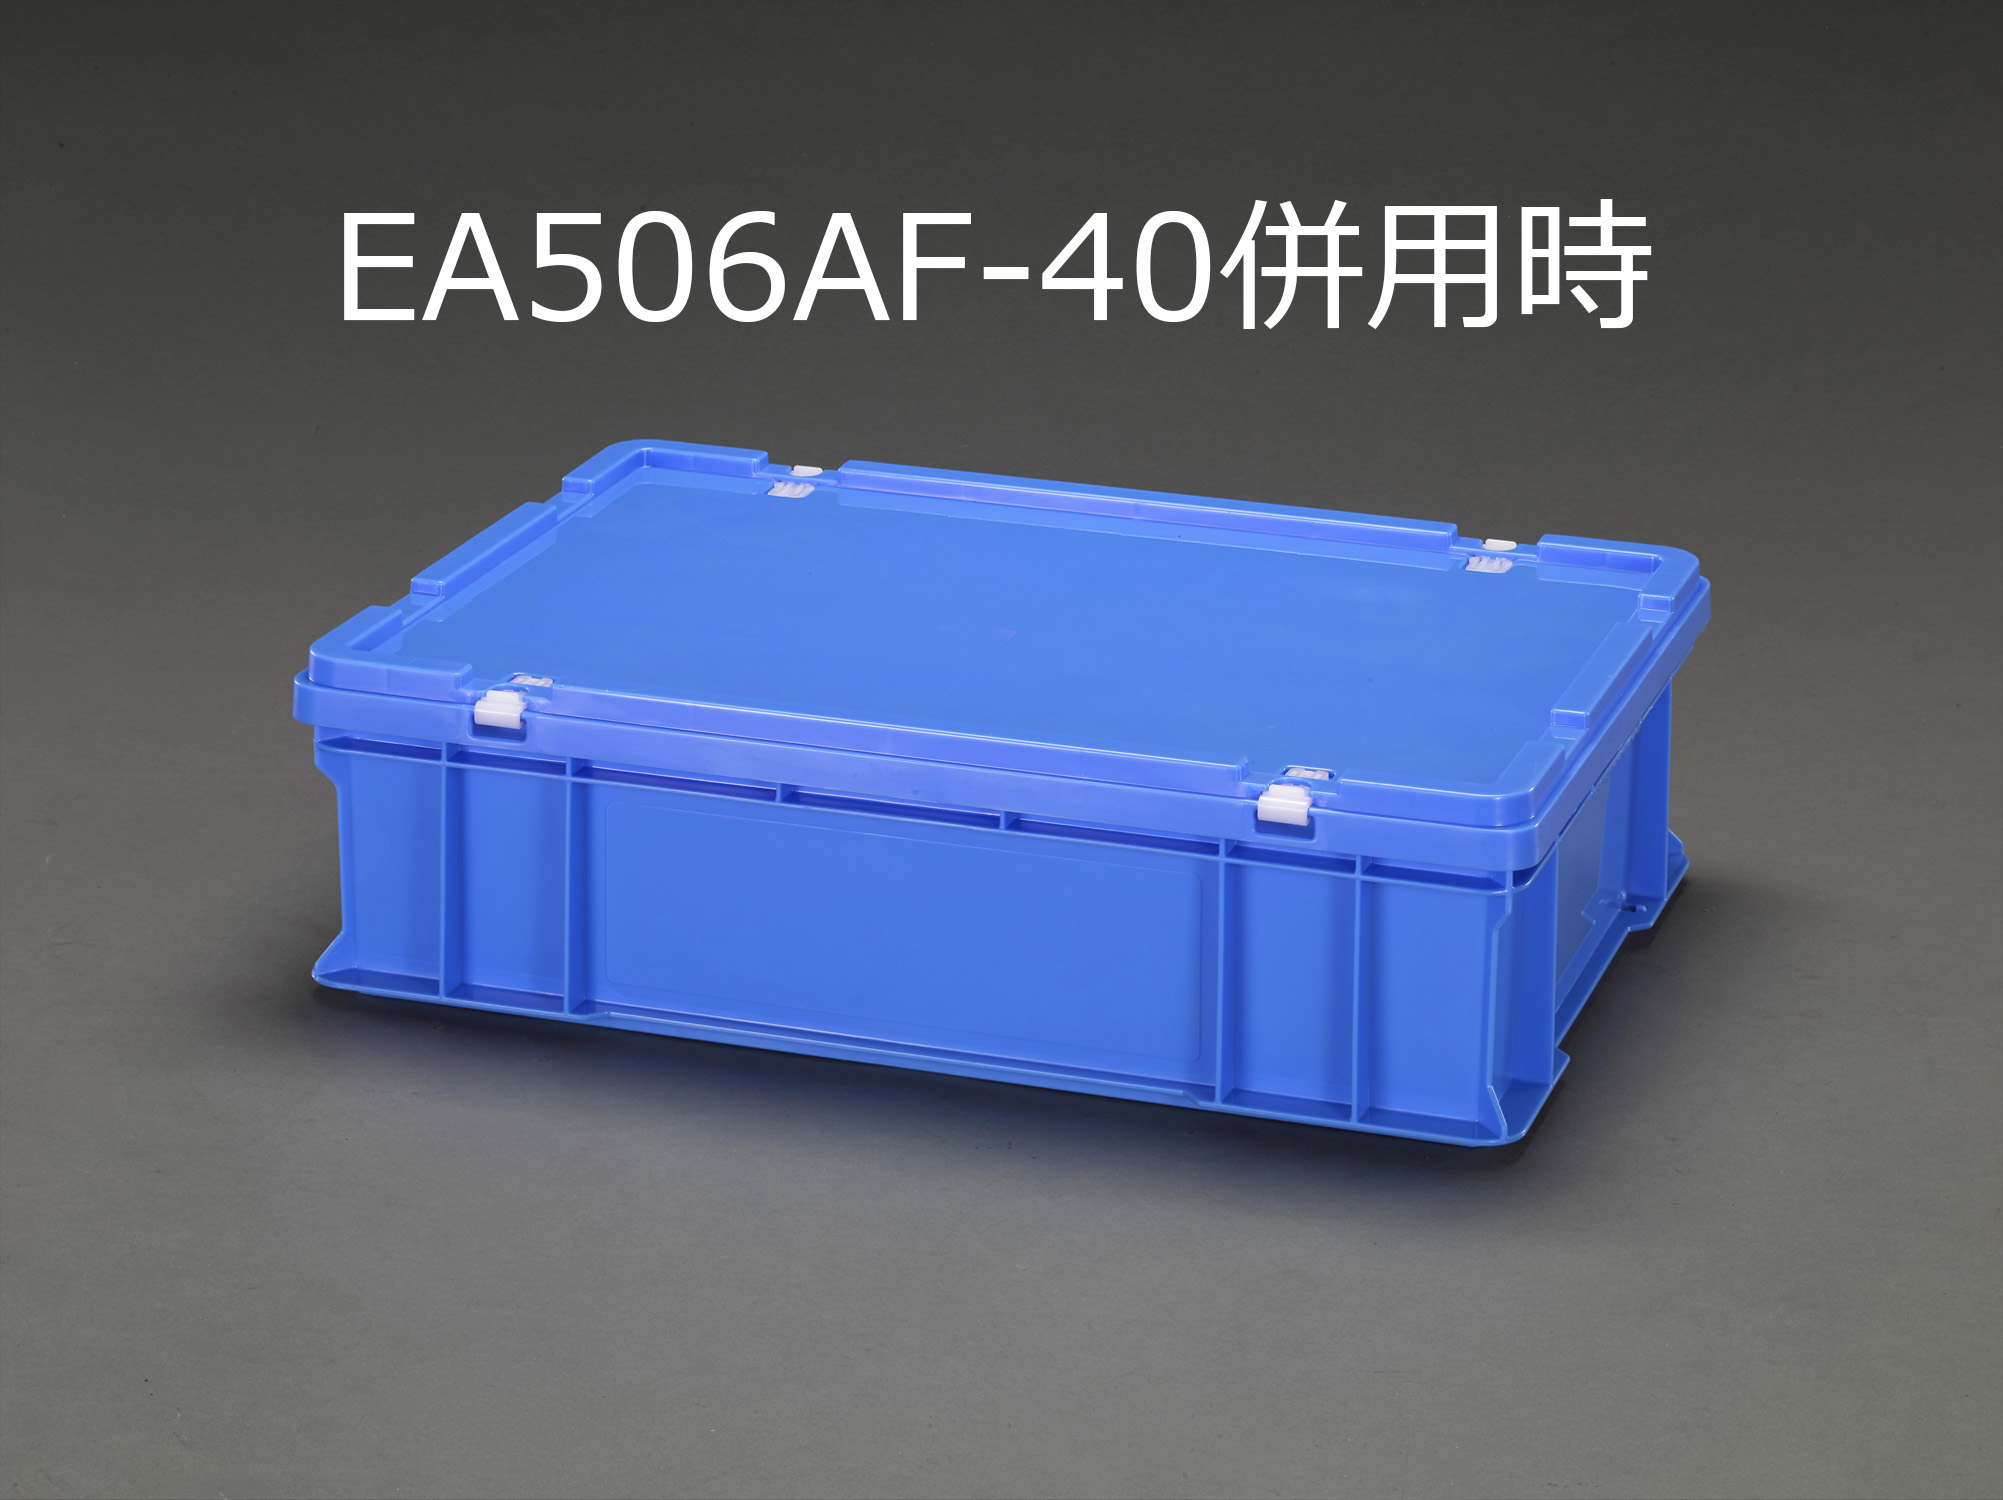 EA506AF-26｜658x448x167mm/39.5L コンテナ(ﾌﾞﾙｰ)｜株式会社エスコ